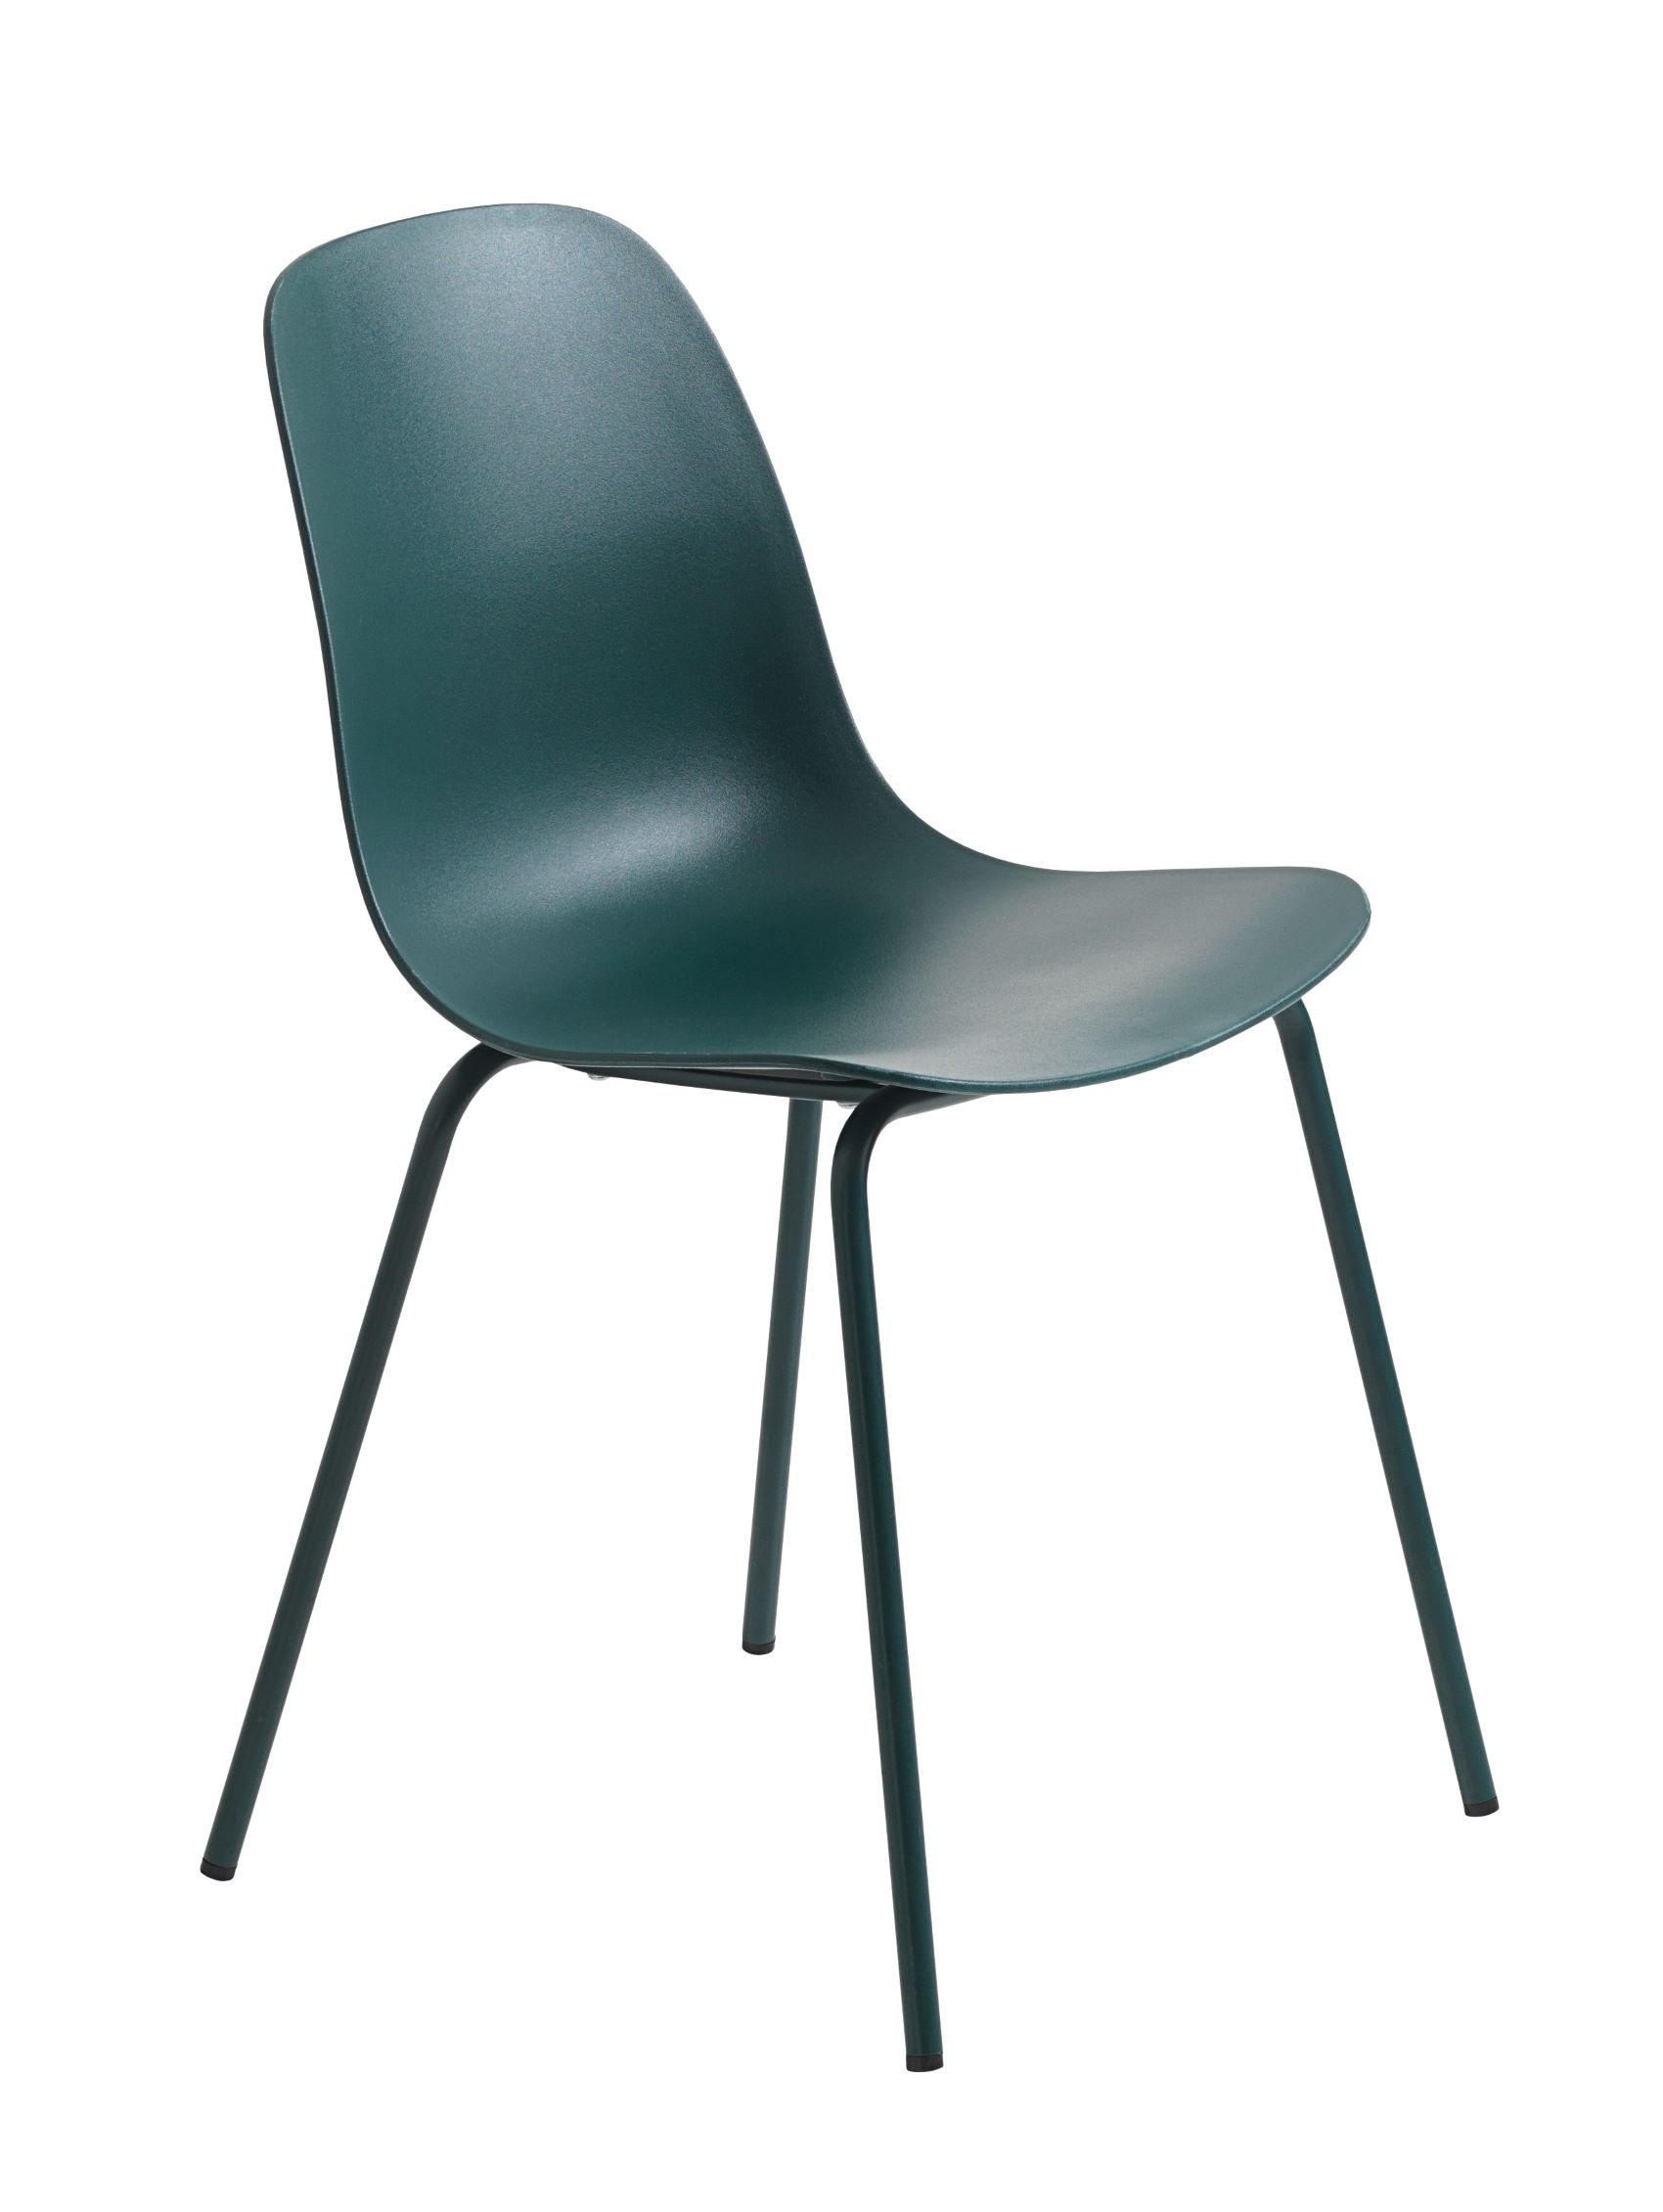 Metallstuhl Whitby - Kunststoff Sitzschale - skandinavisches Design - petrol